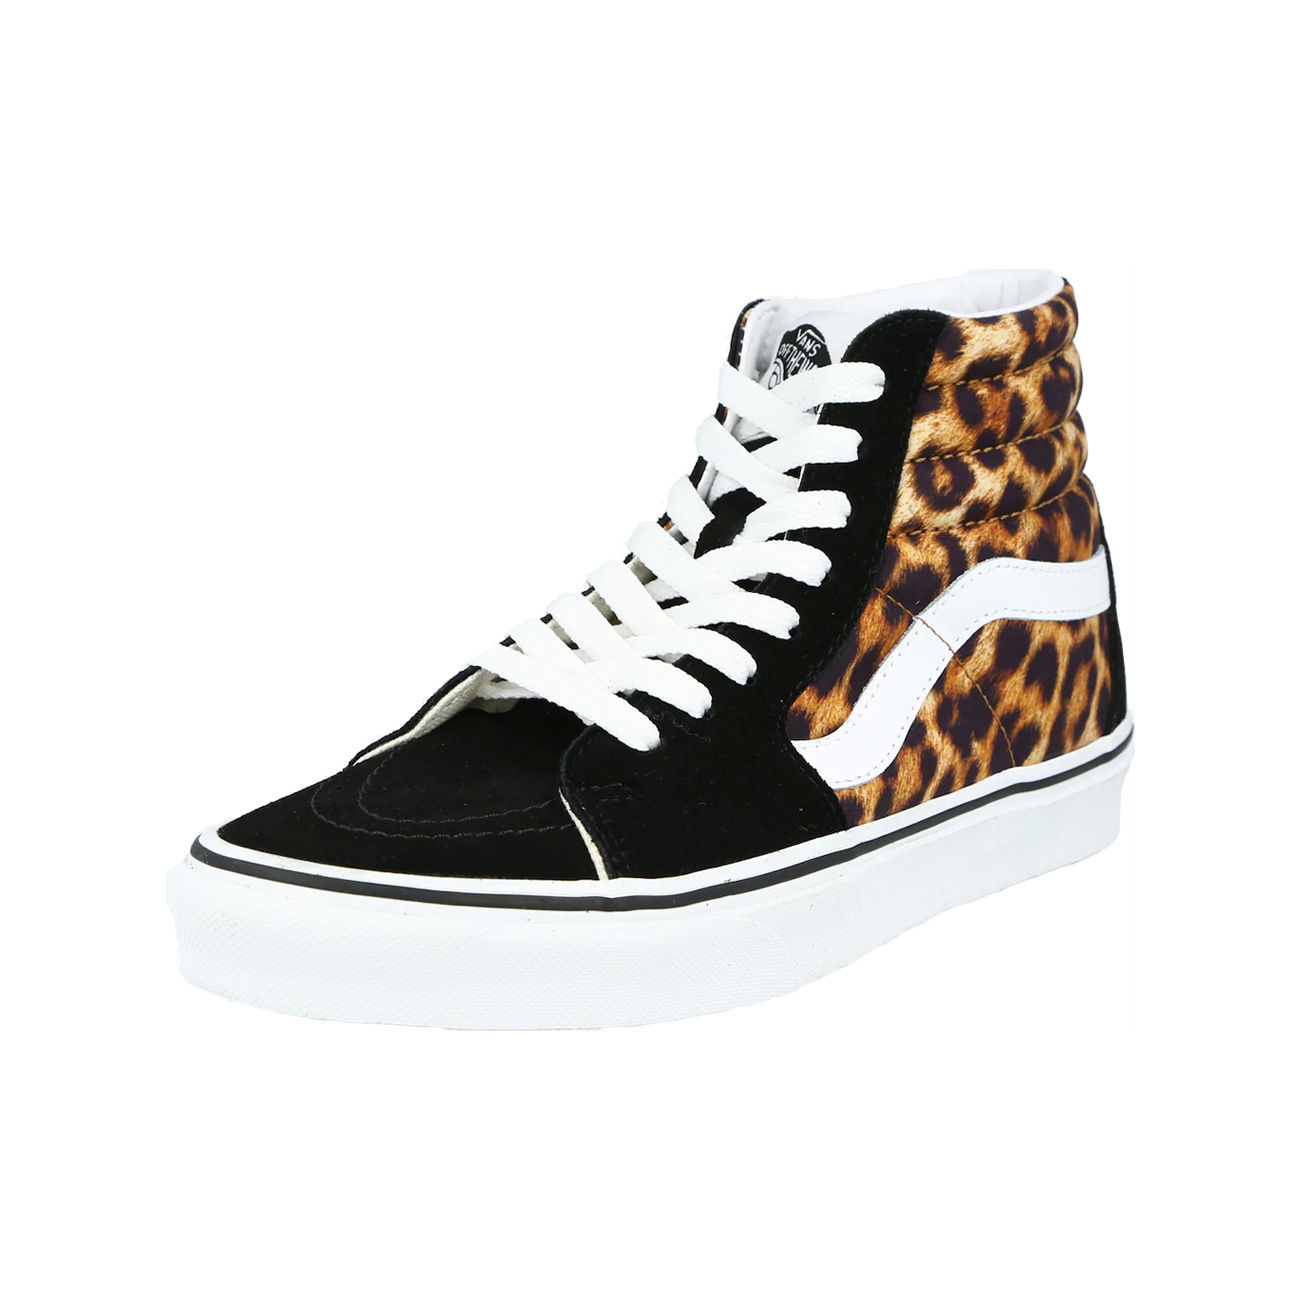 Women's Two-Tone Sneakers - Leopard Print / White Soles / Black